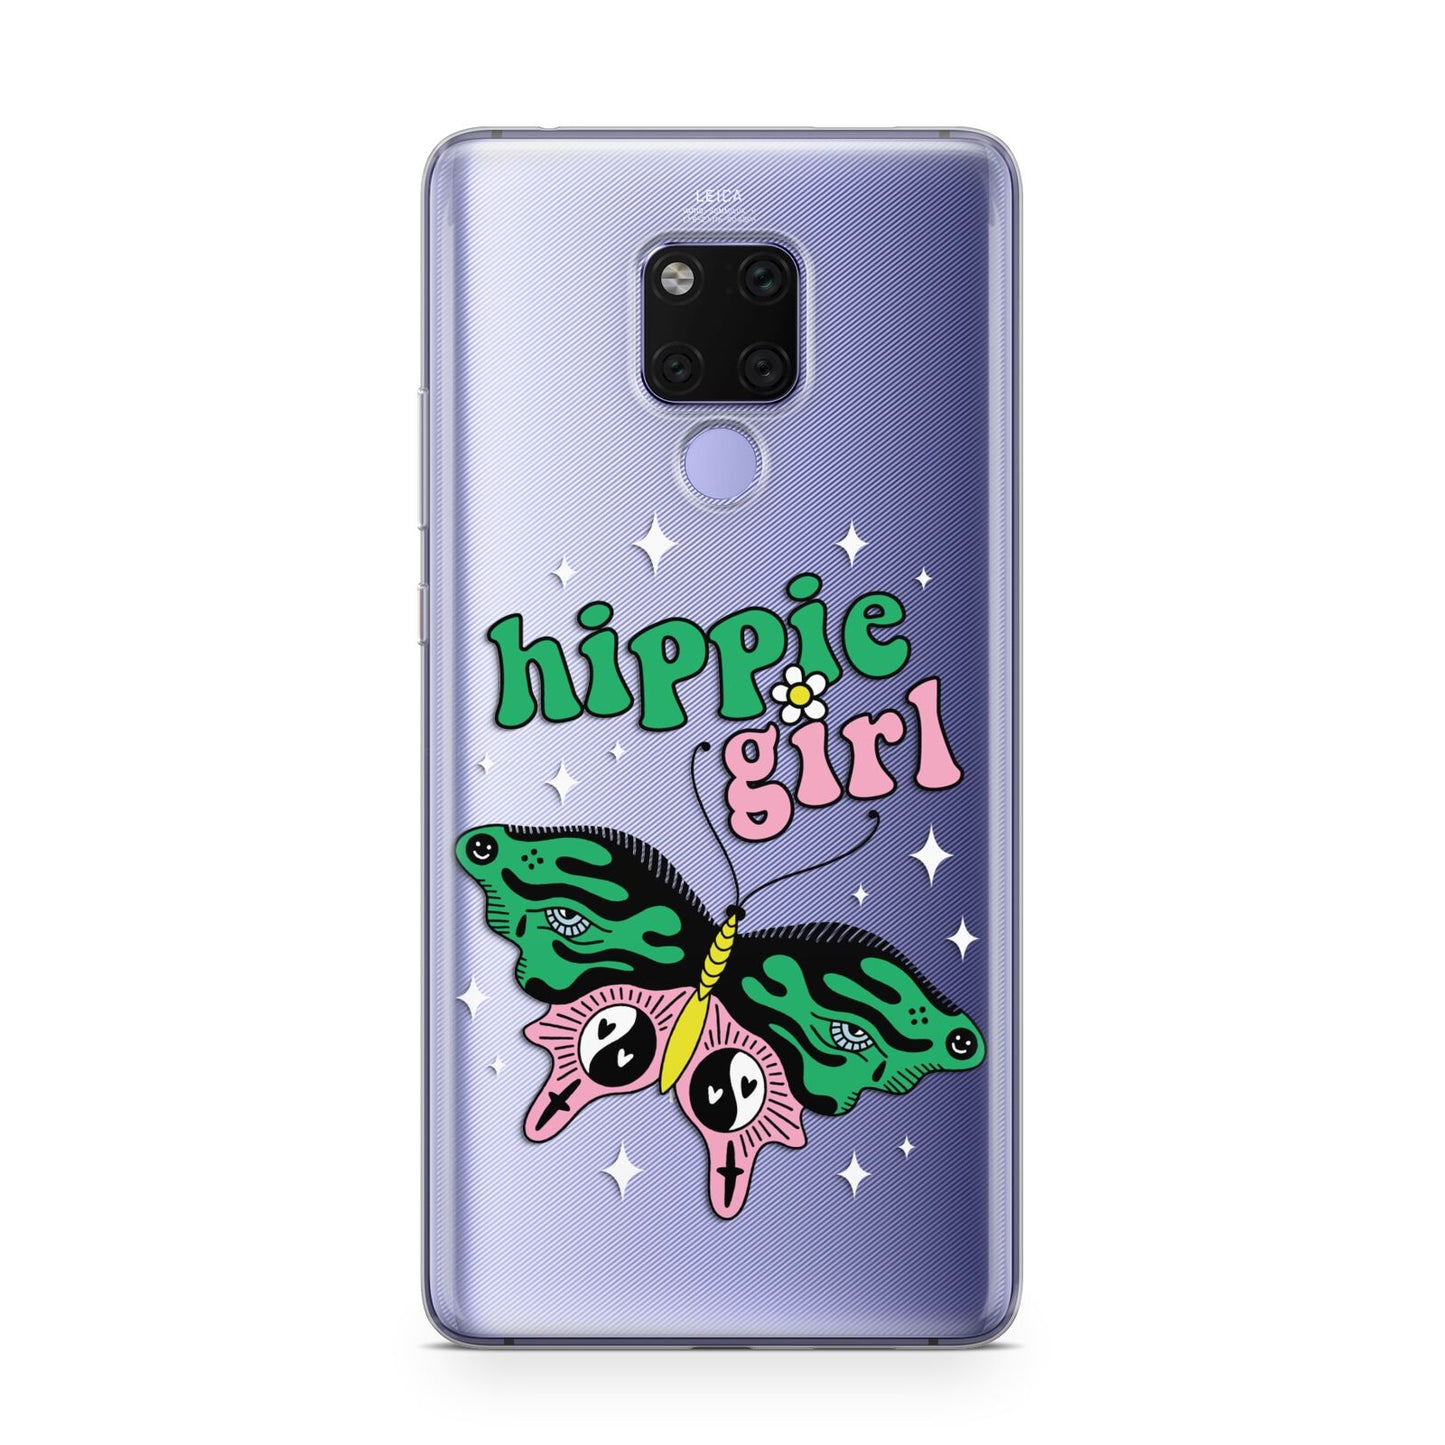 Hippie Girl Huawei Mate 20X Phone Case